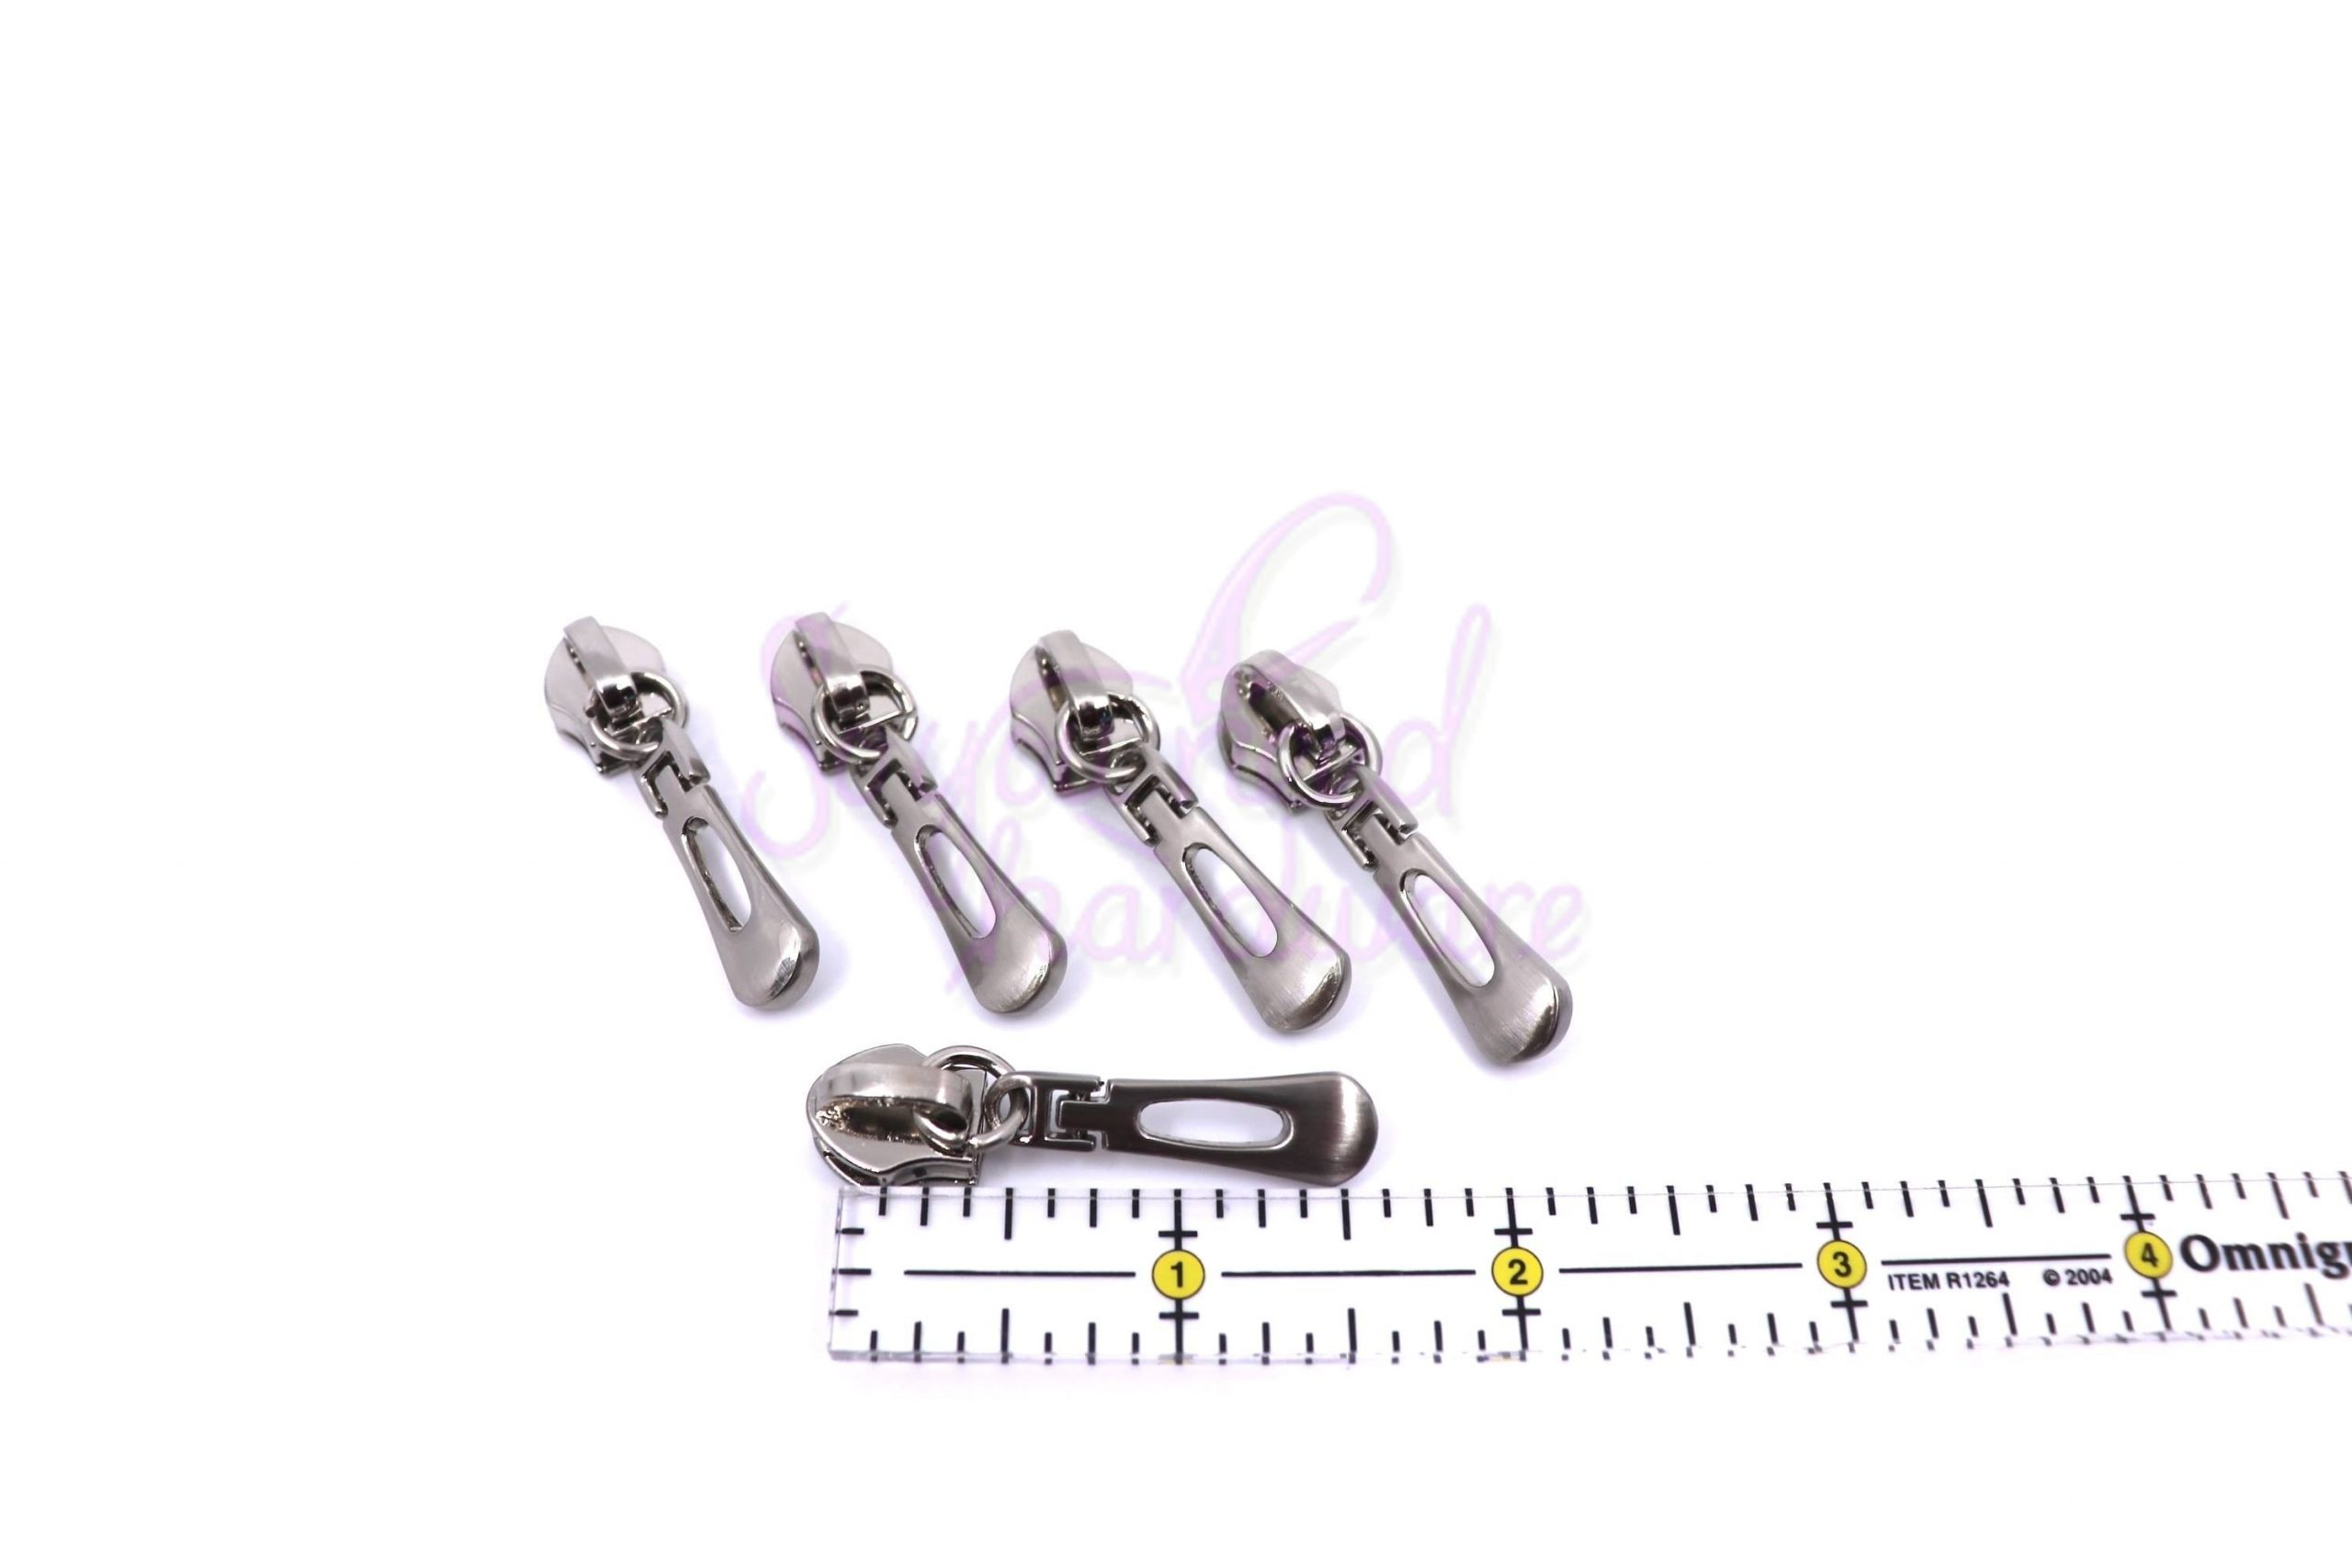 5 Slotted Teardrop Nylon Zipper Pulls - Set of 5 - So You Need Hardware